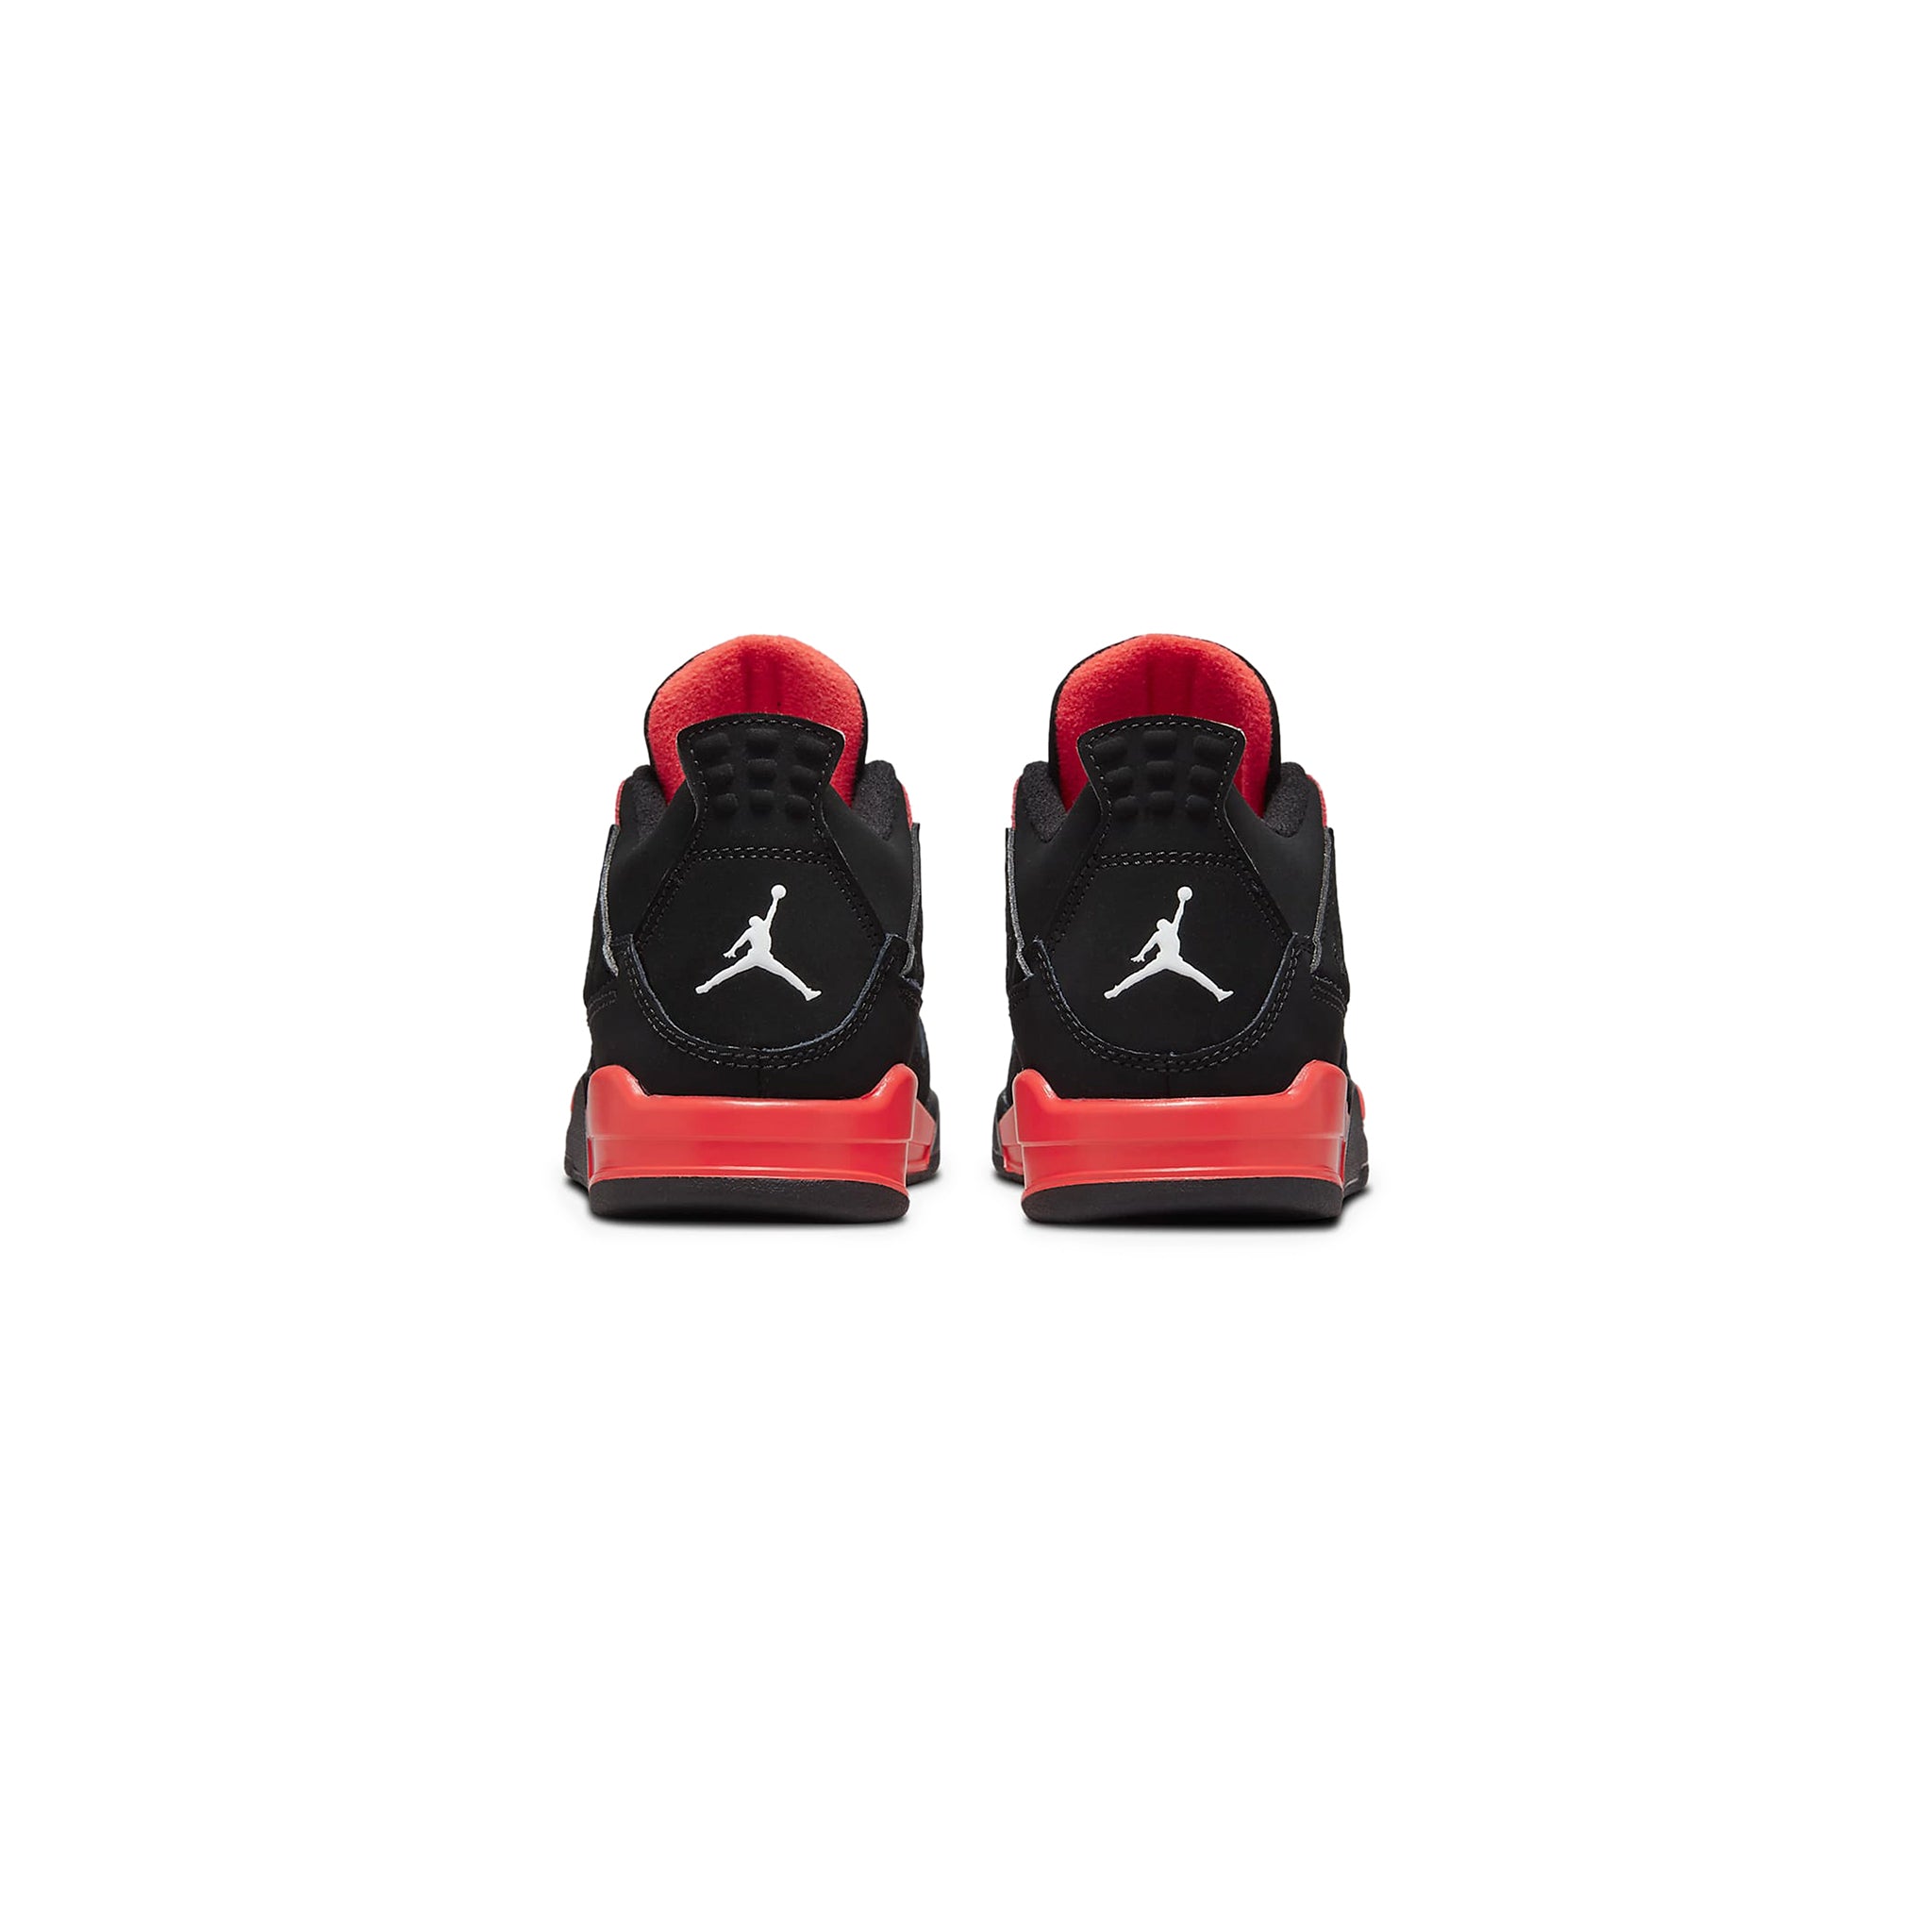 Back view of Air Jordan 4 Retro Red Thunder (PS) BQ7669-016